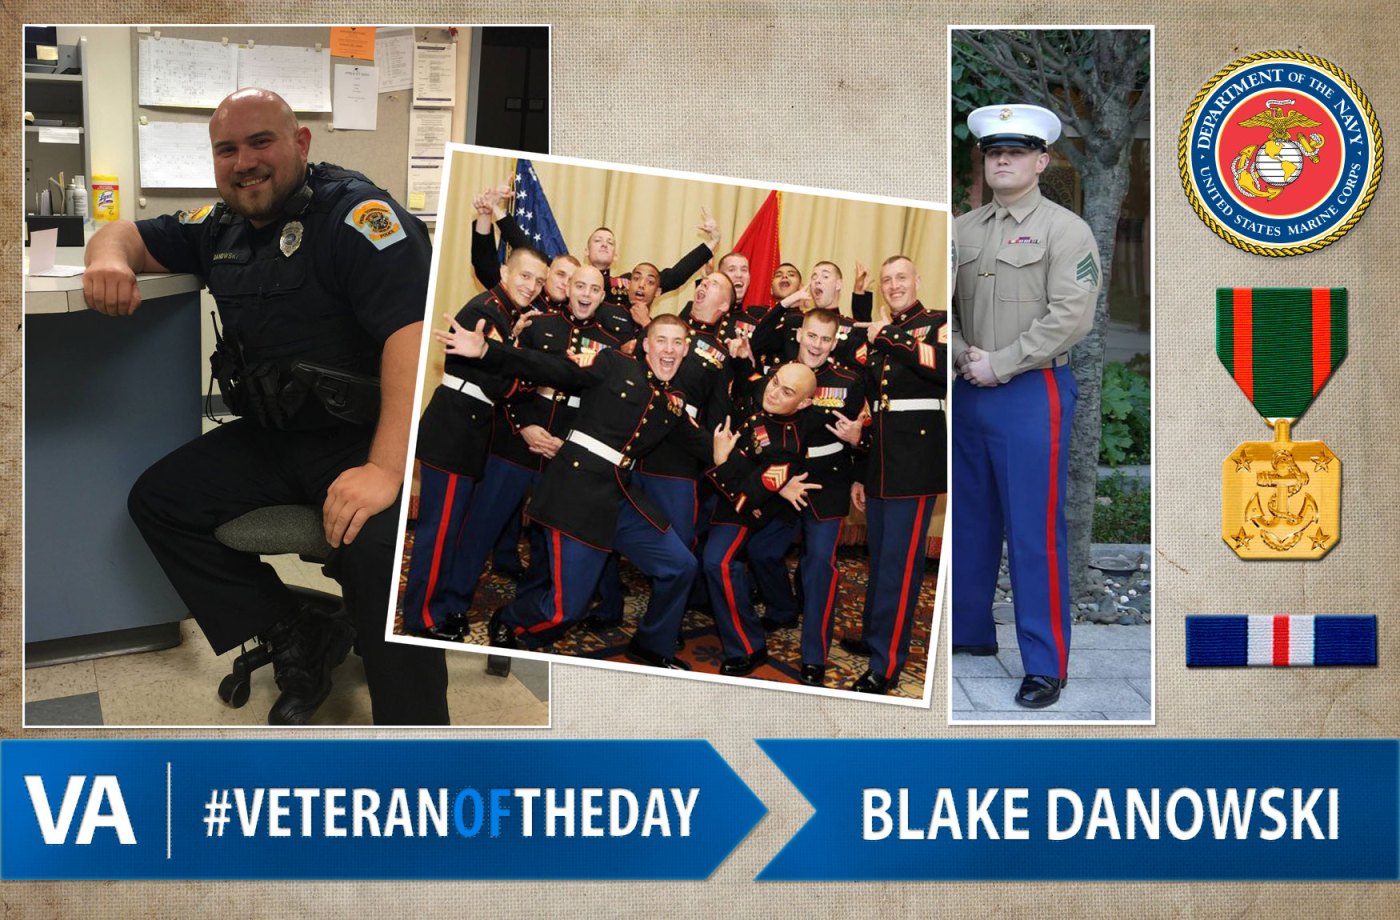 Blake Danowsk - Veteran of the Day